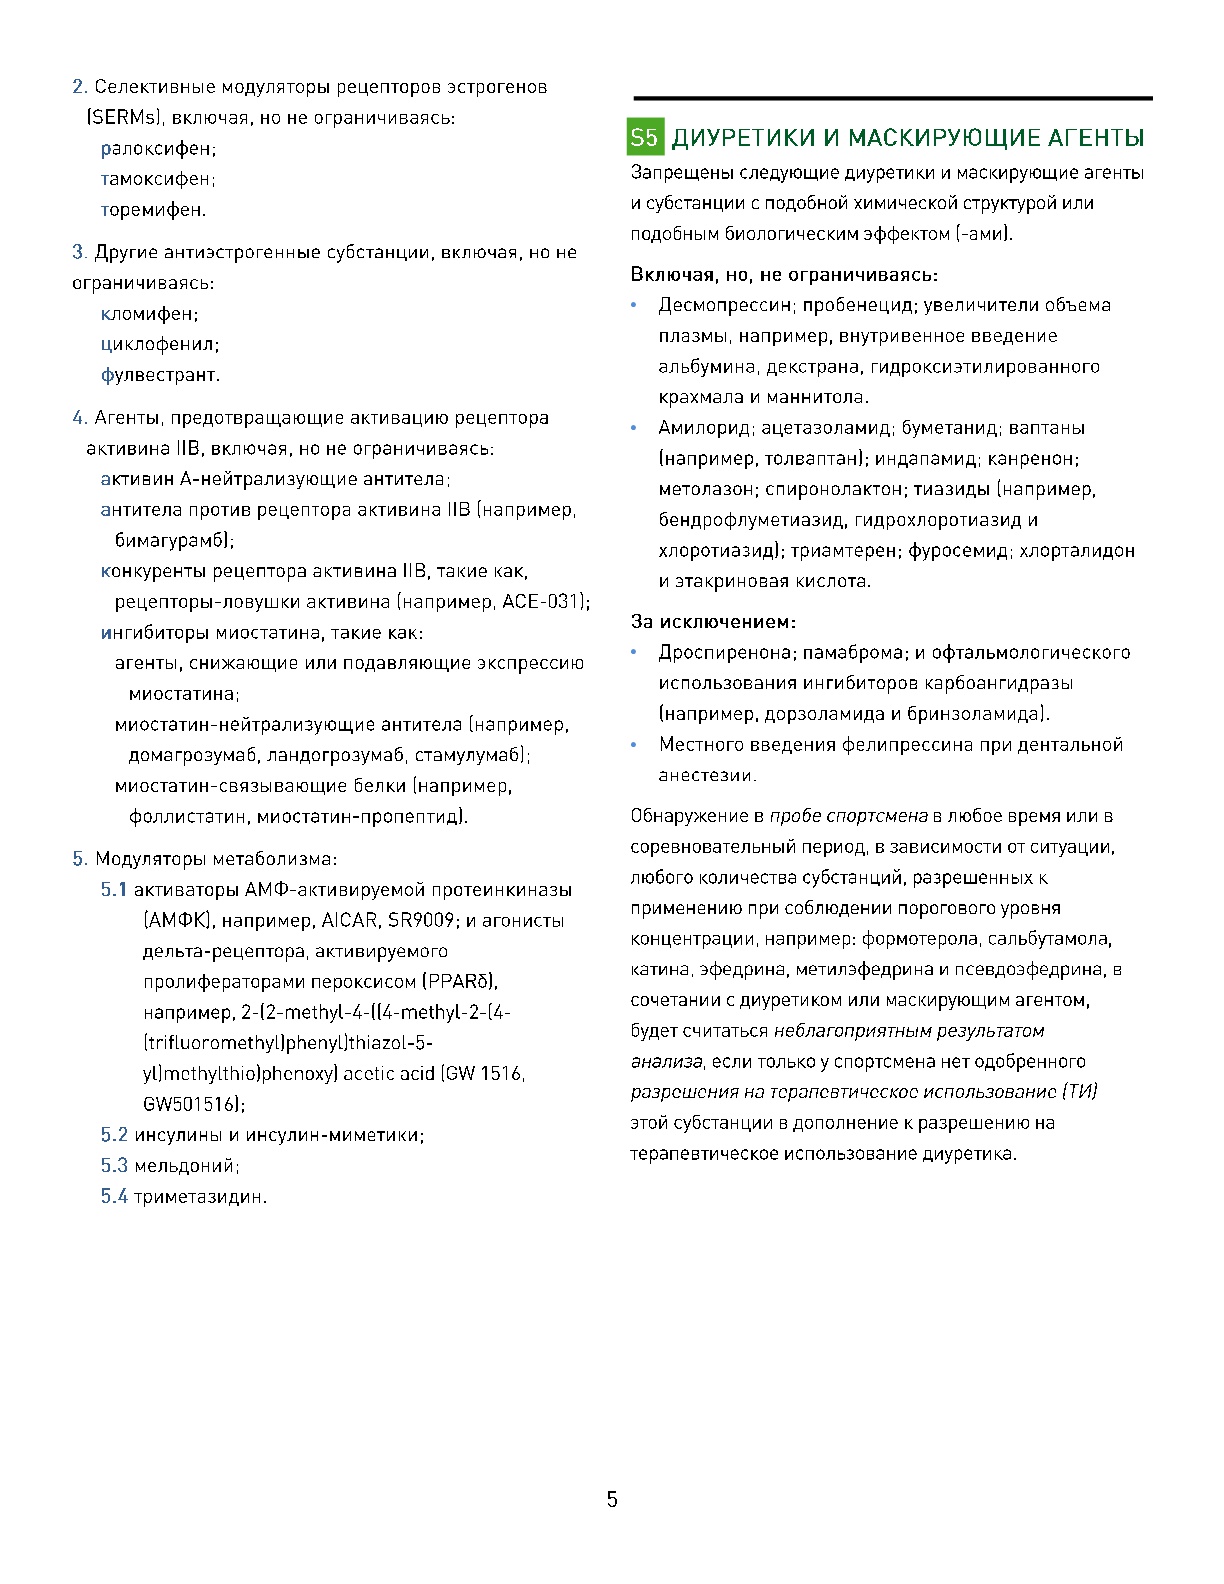 2019 Prohibited List RUS 005